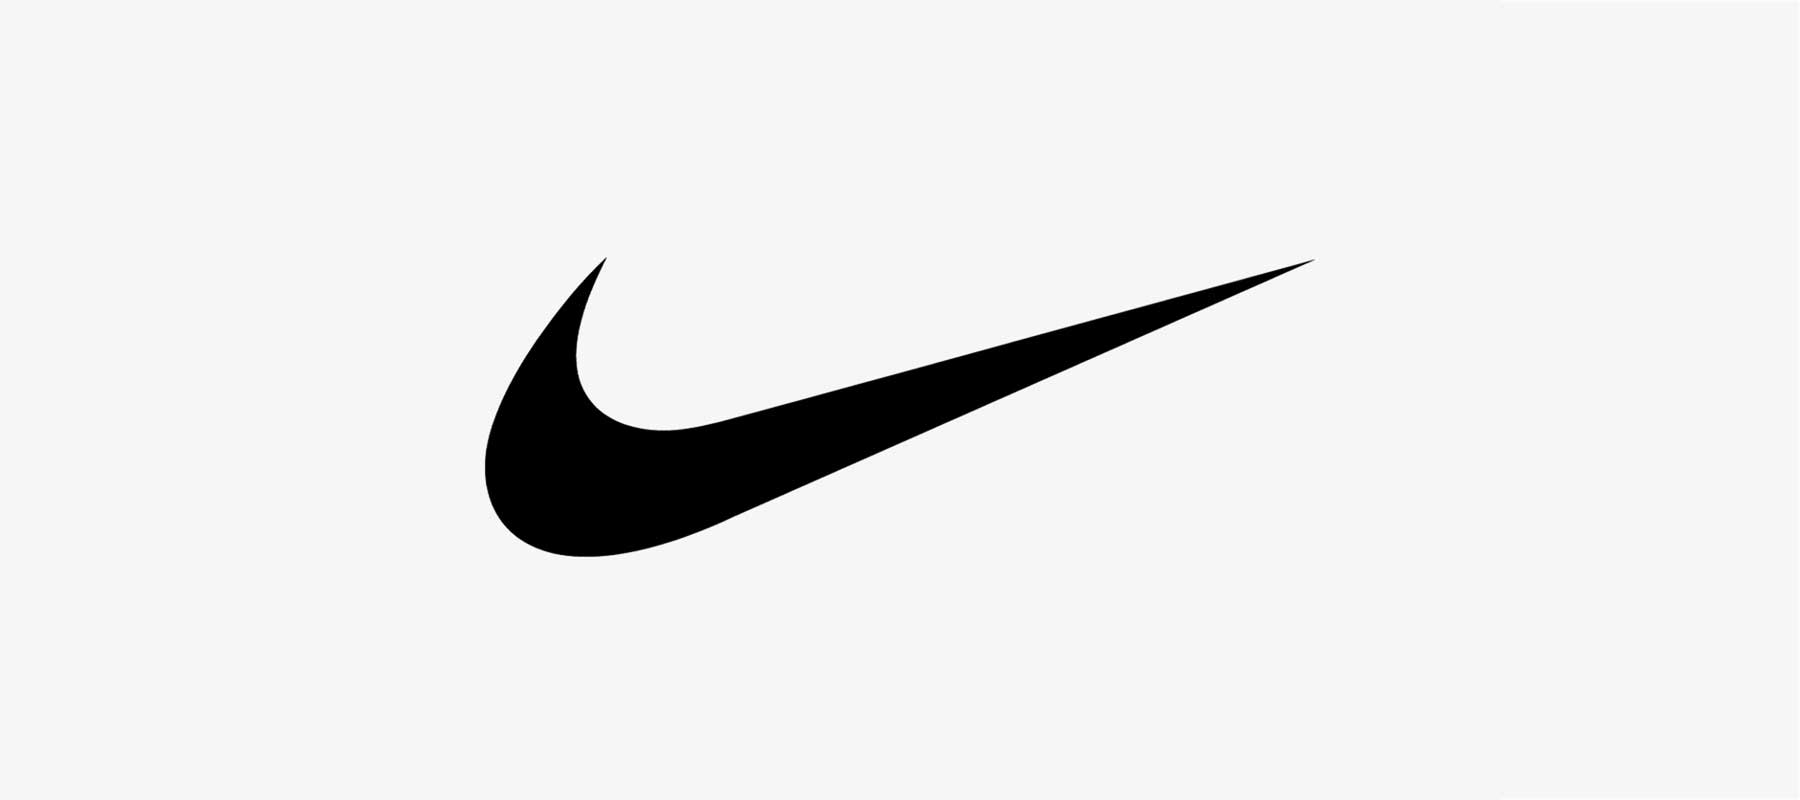 Nike Tipped Swoosh 6pk 2.0 bandeaux sport pour cheveux - Soccer Sport  Fitness